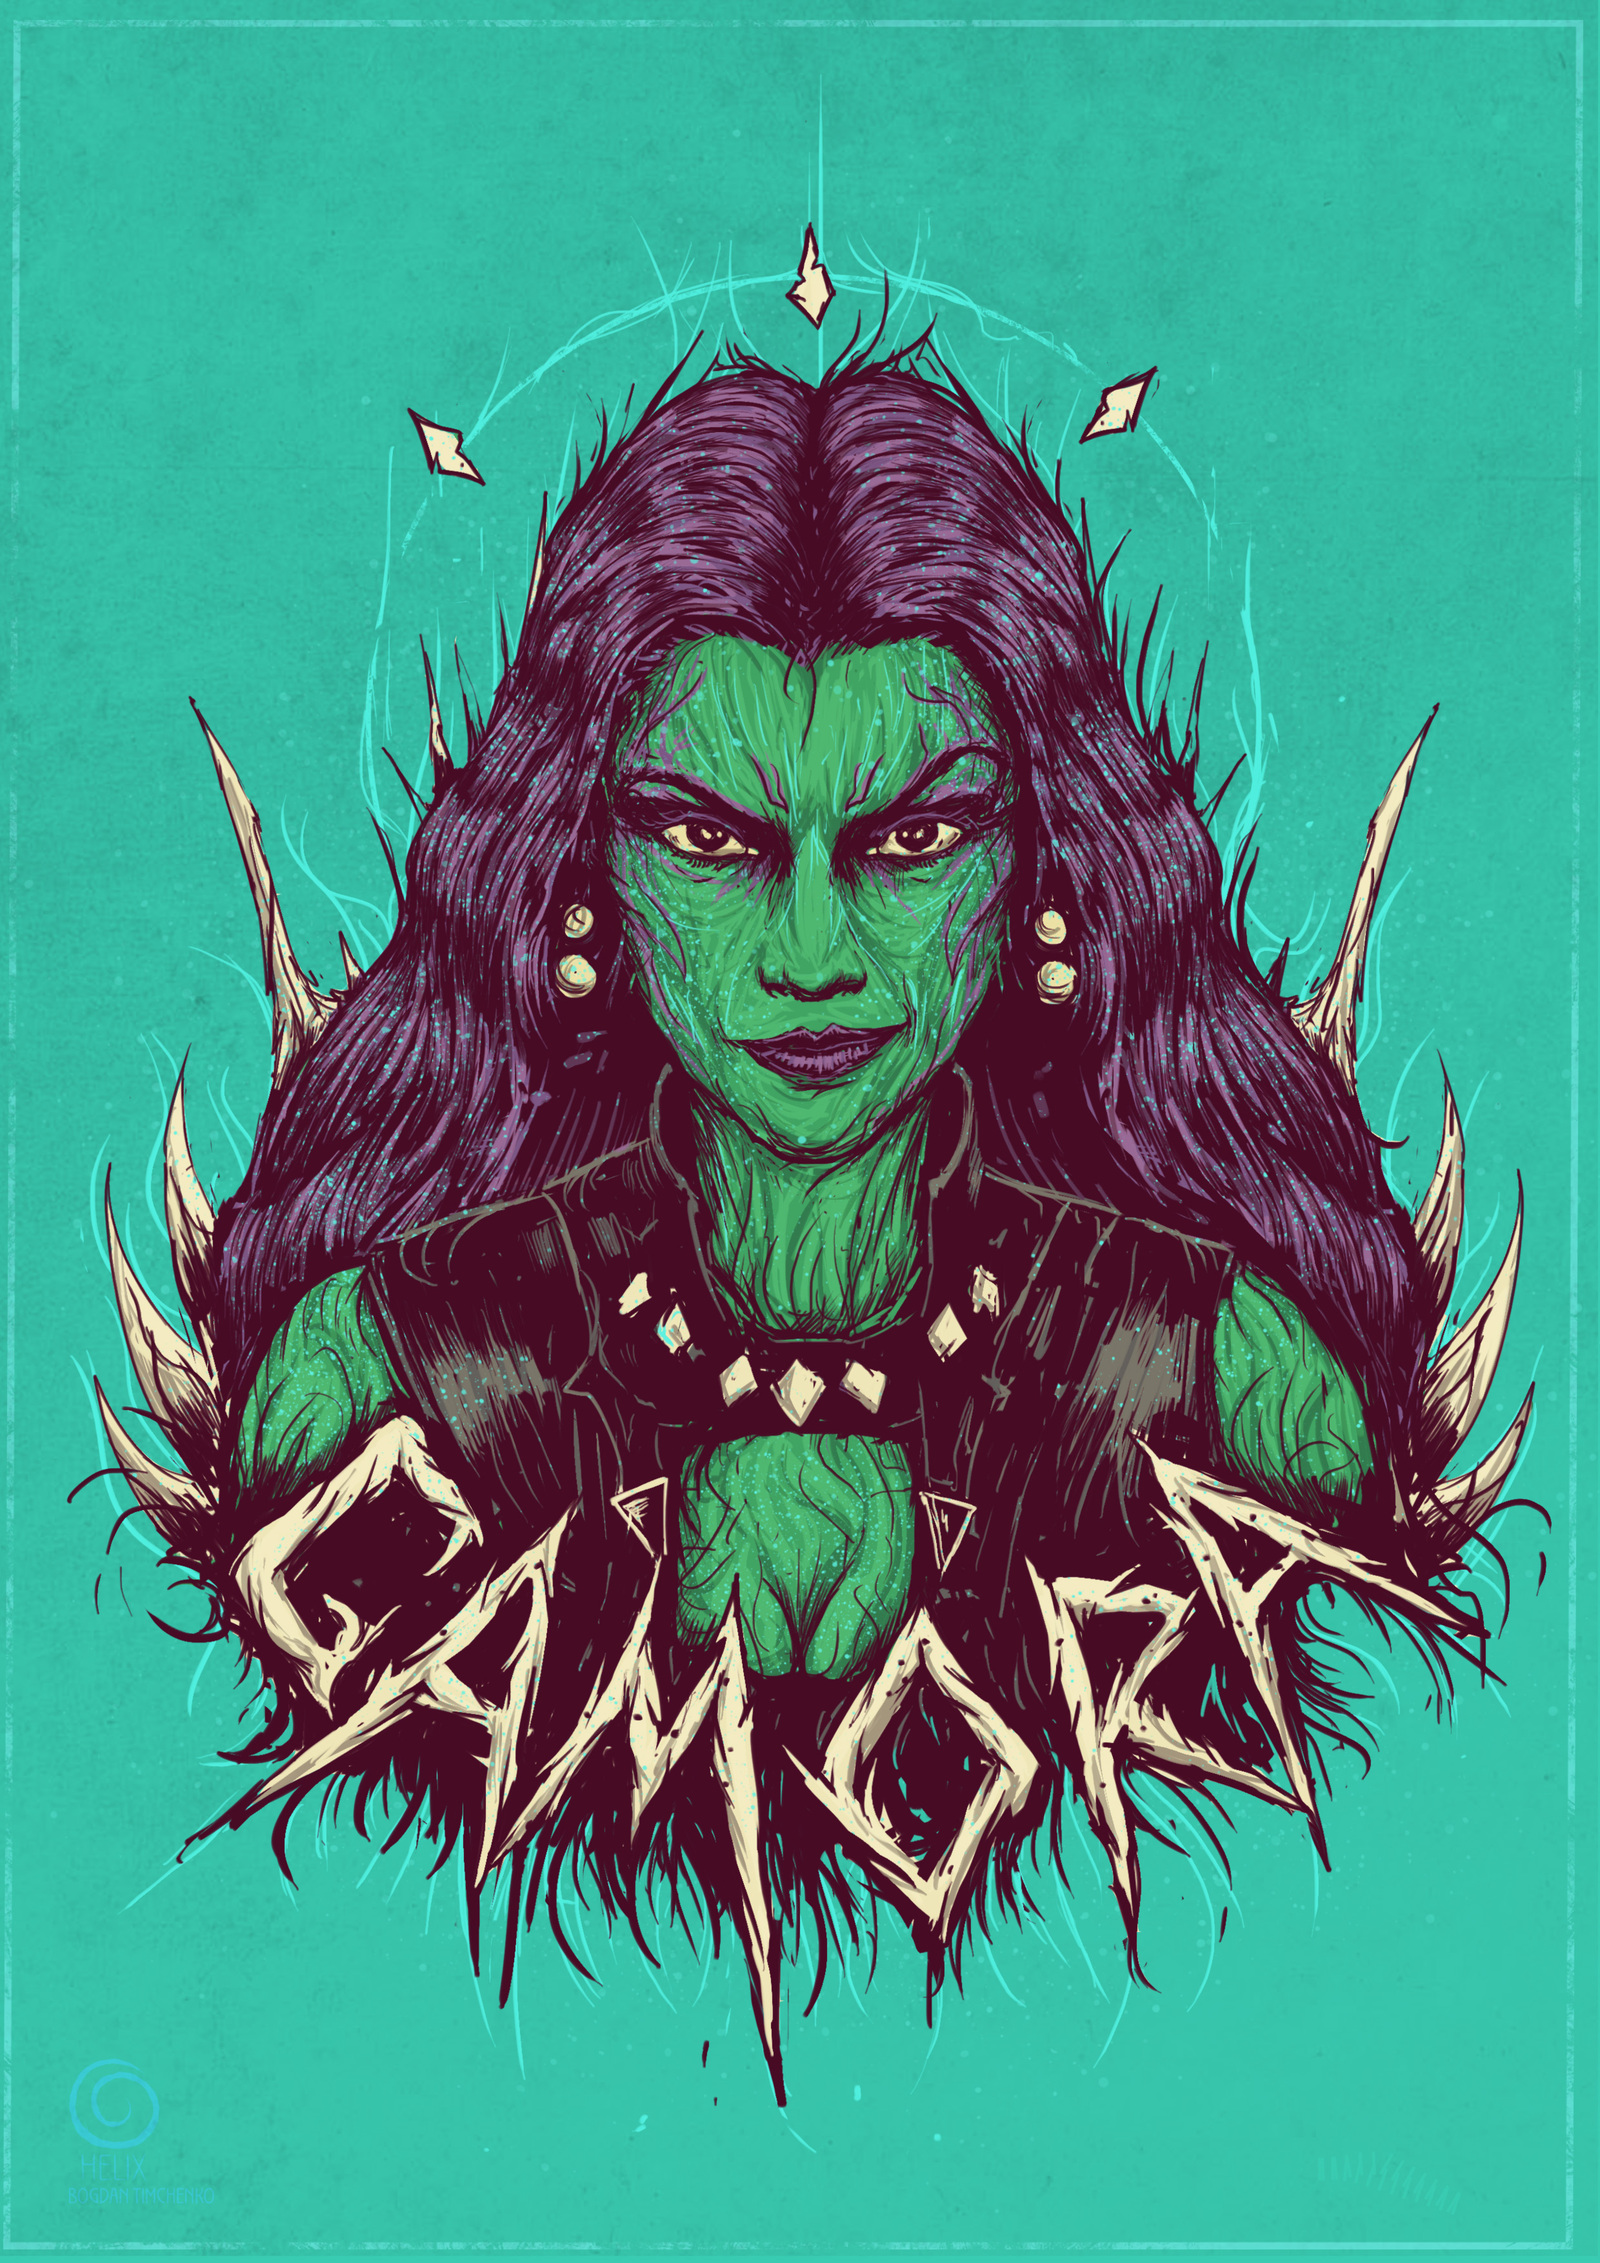 Gamora - My, Gamora, , , Guardians of the Galaxy, Guardians of the Galaxy Vol. 2, Longpost